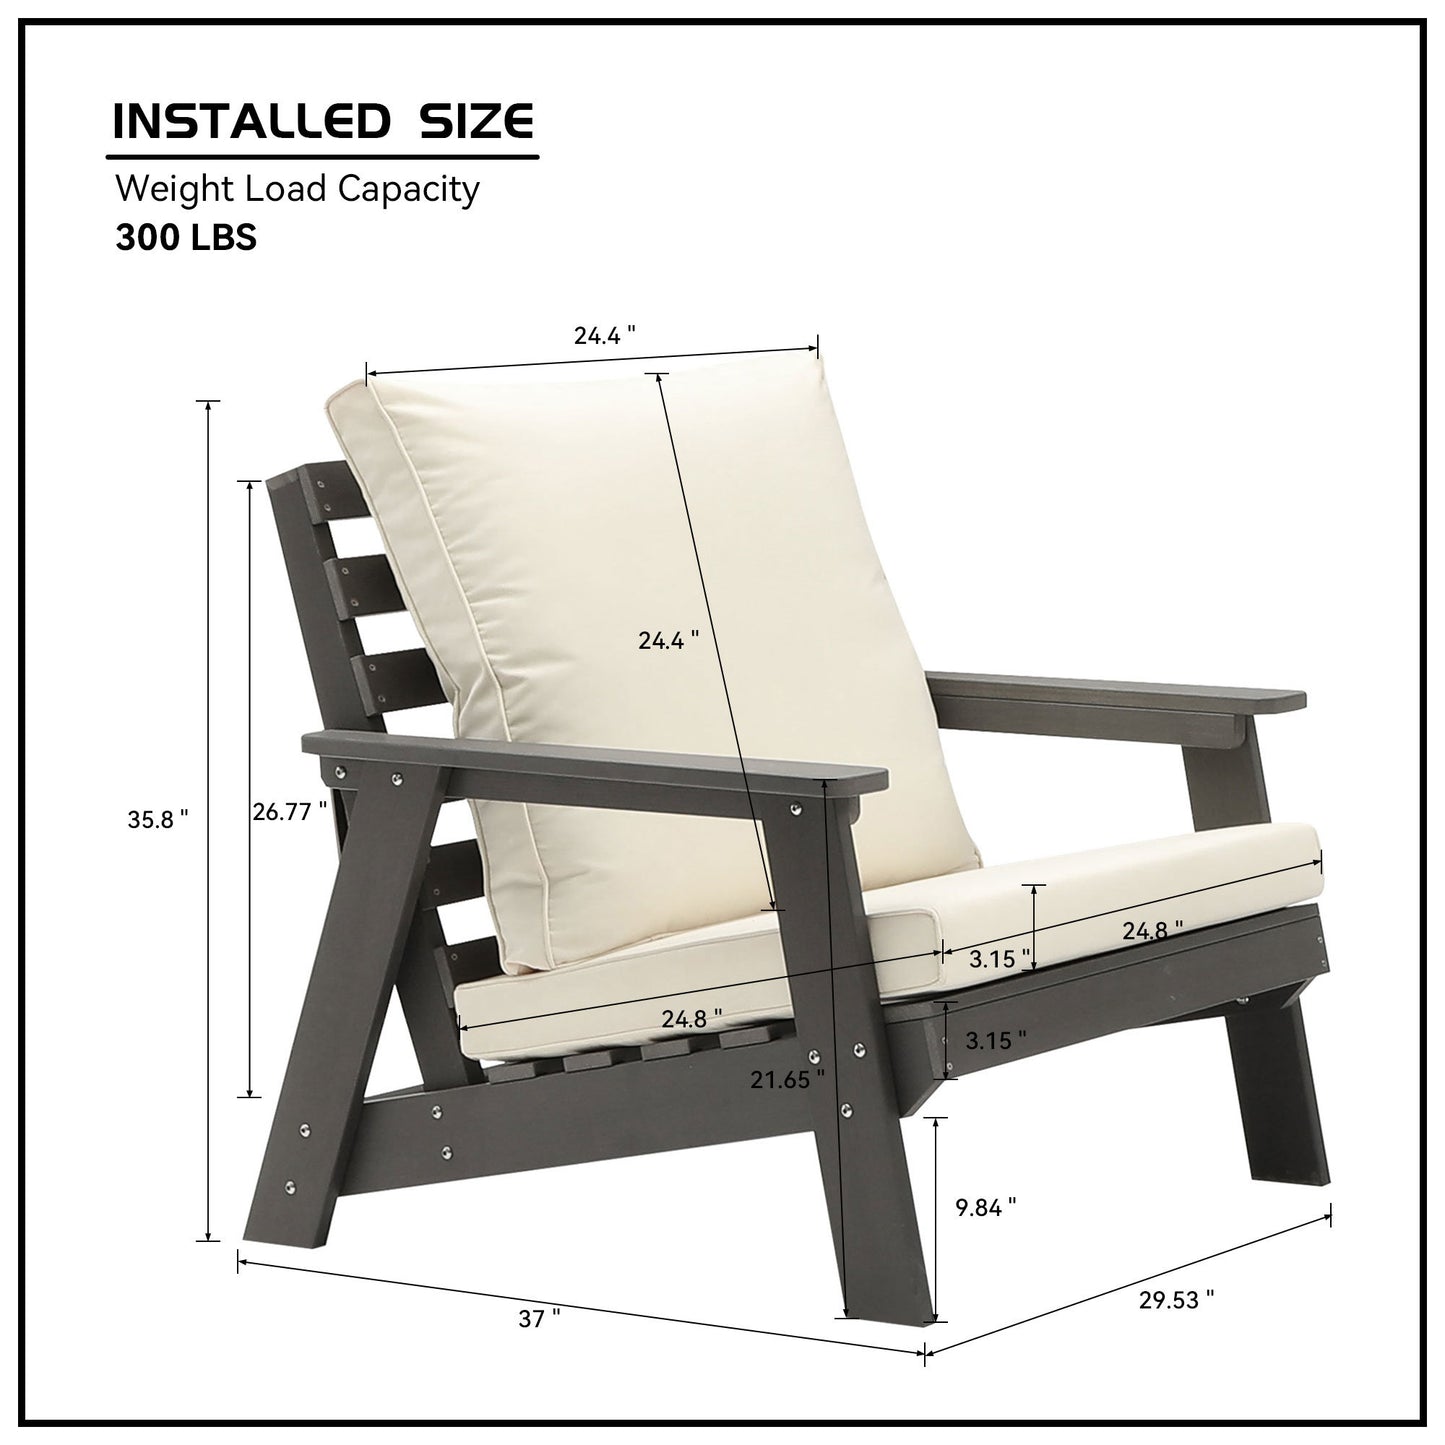 Single Sofa Chair with Cushion Grey/Beige l HDPE